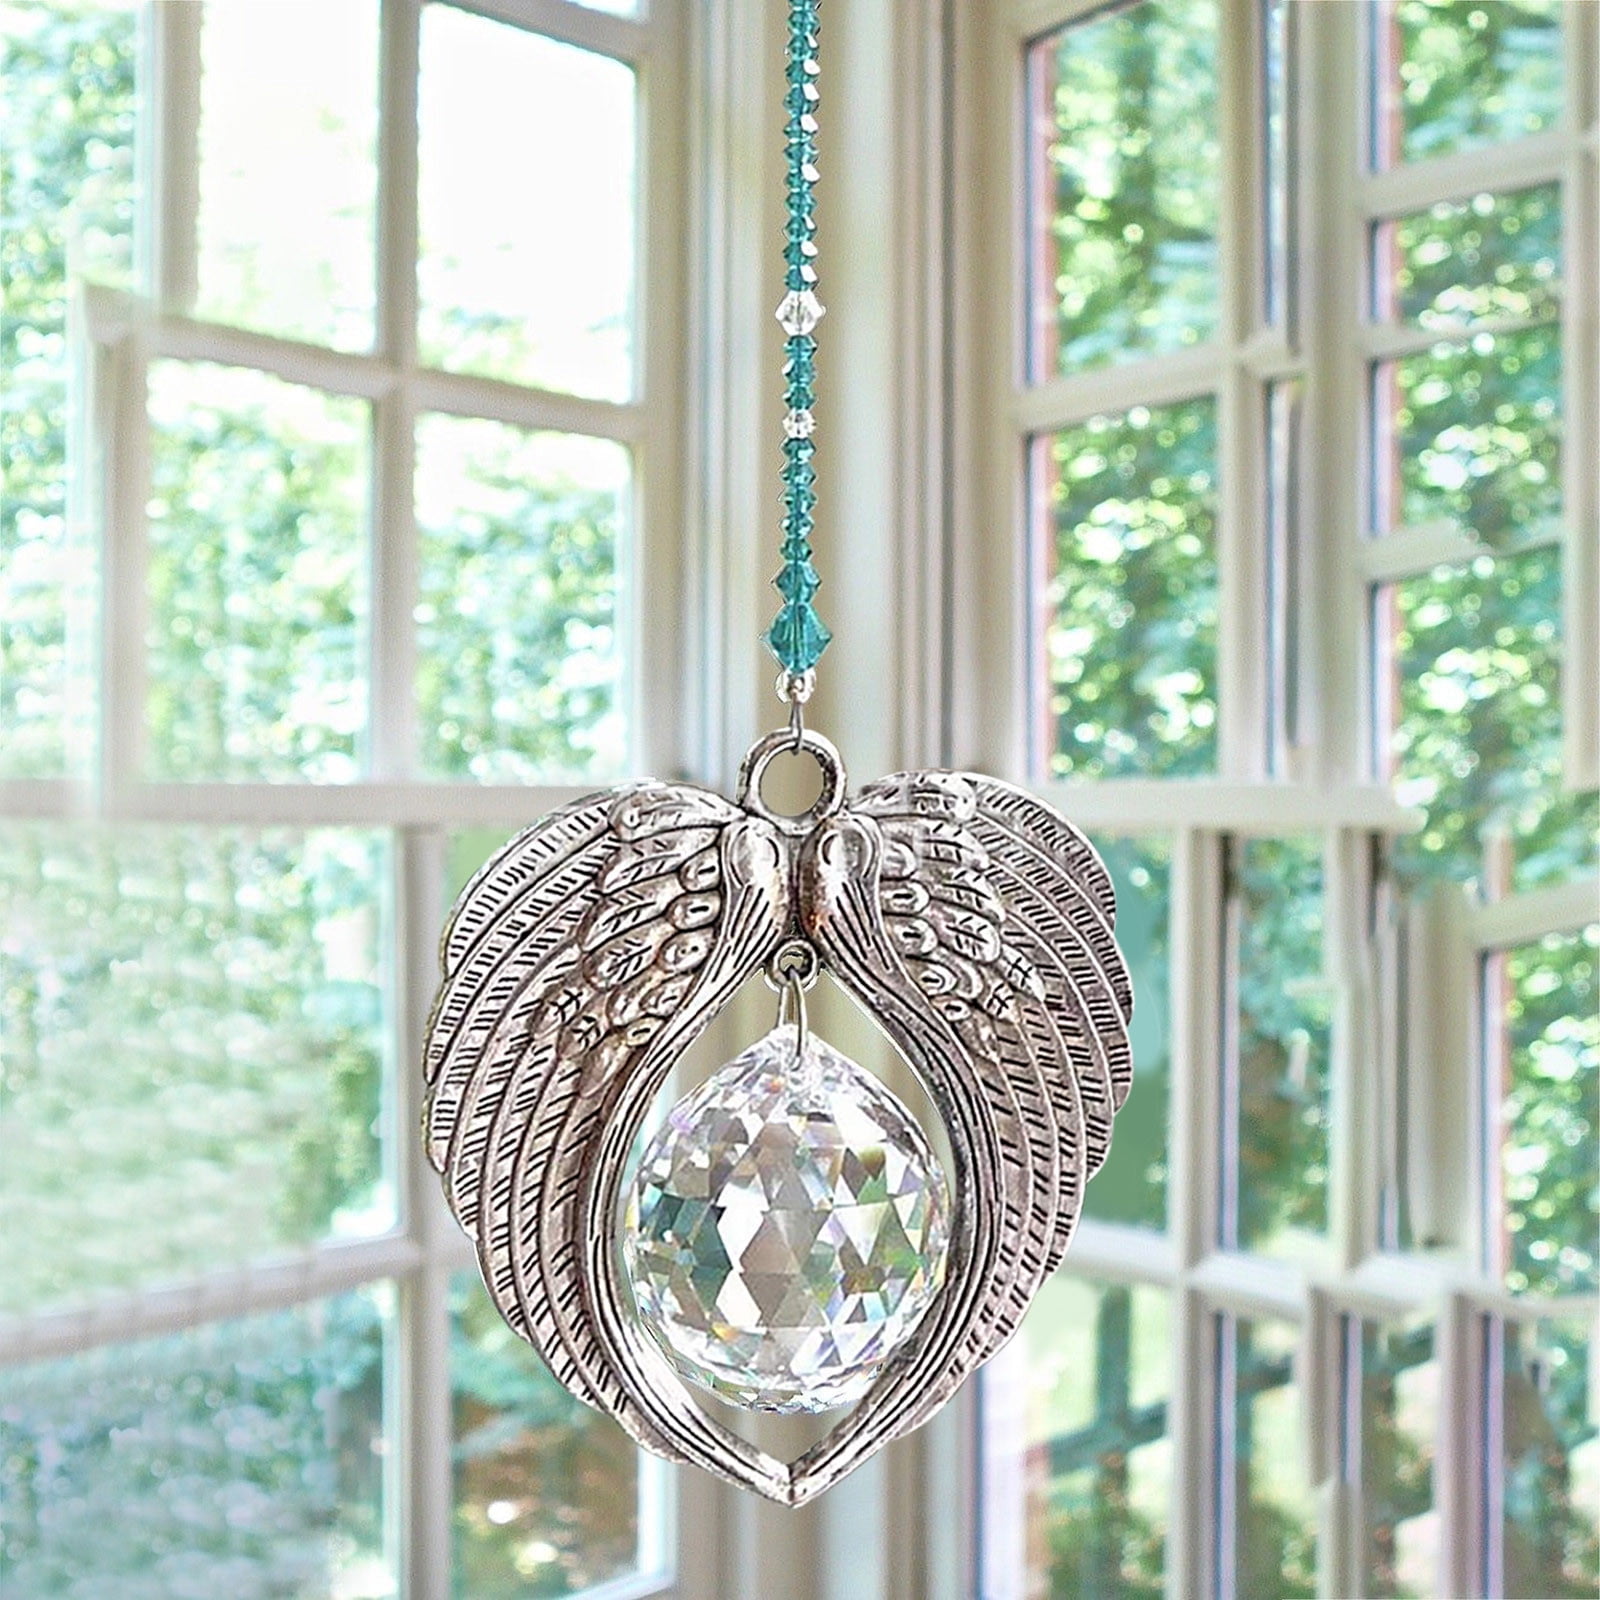 Set 5 Suncatcher Crystal Ball Prism Silver Angel Wings Pendant Window Hang Decor 